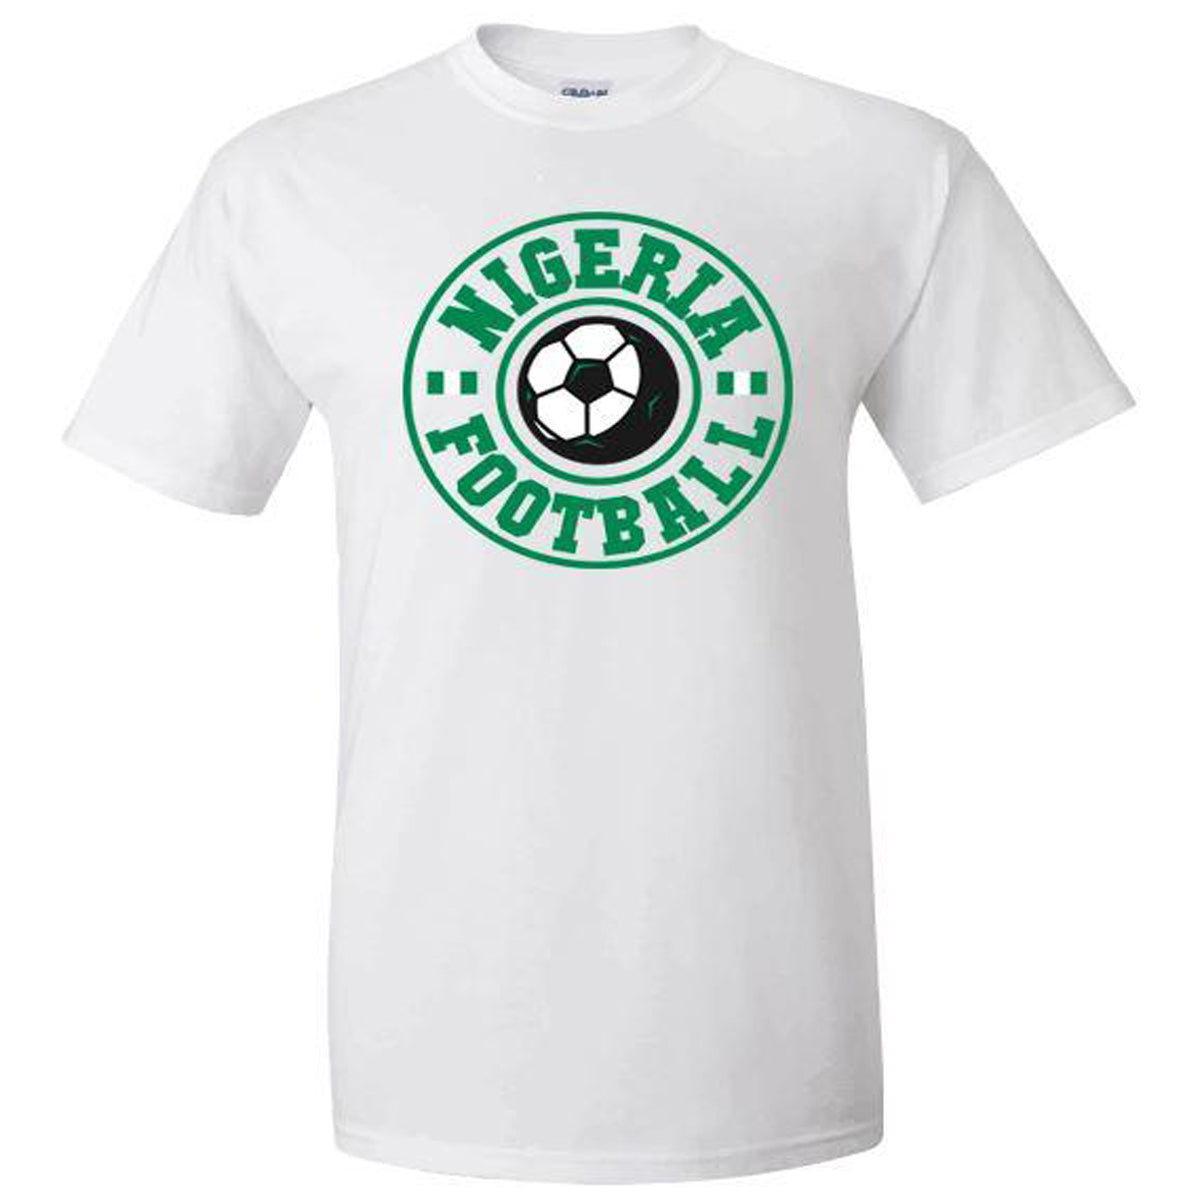 Nigeria World Cup 2022 Spirit Tee | Various Designs Shirt 411 Circle Youth Medium Youth